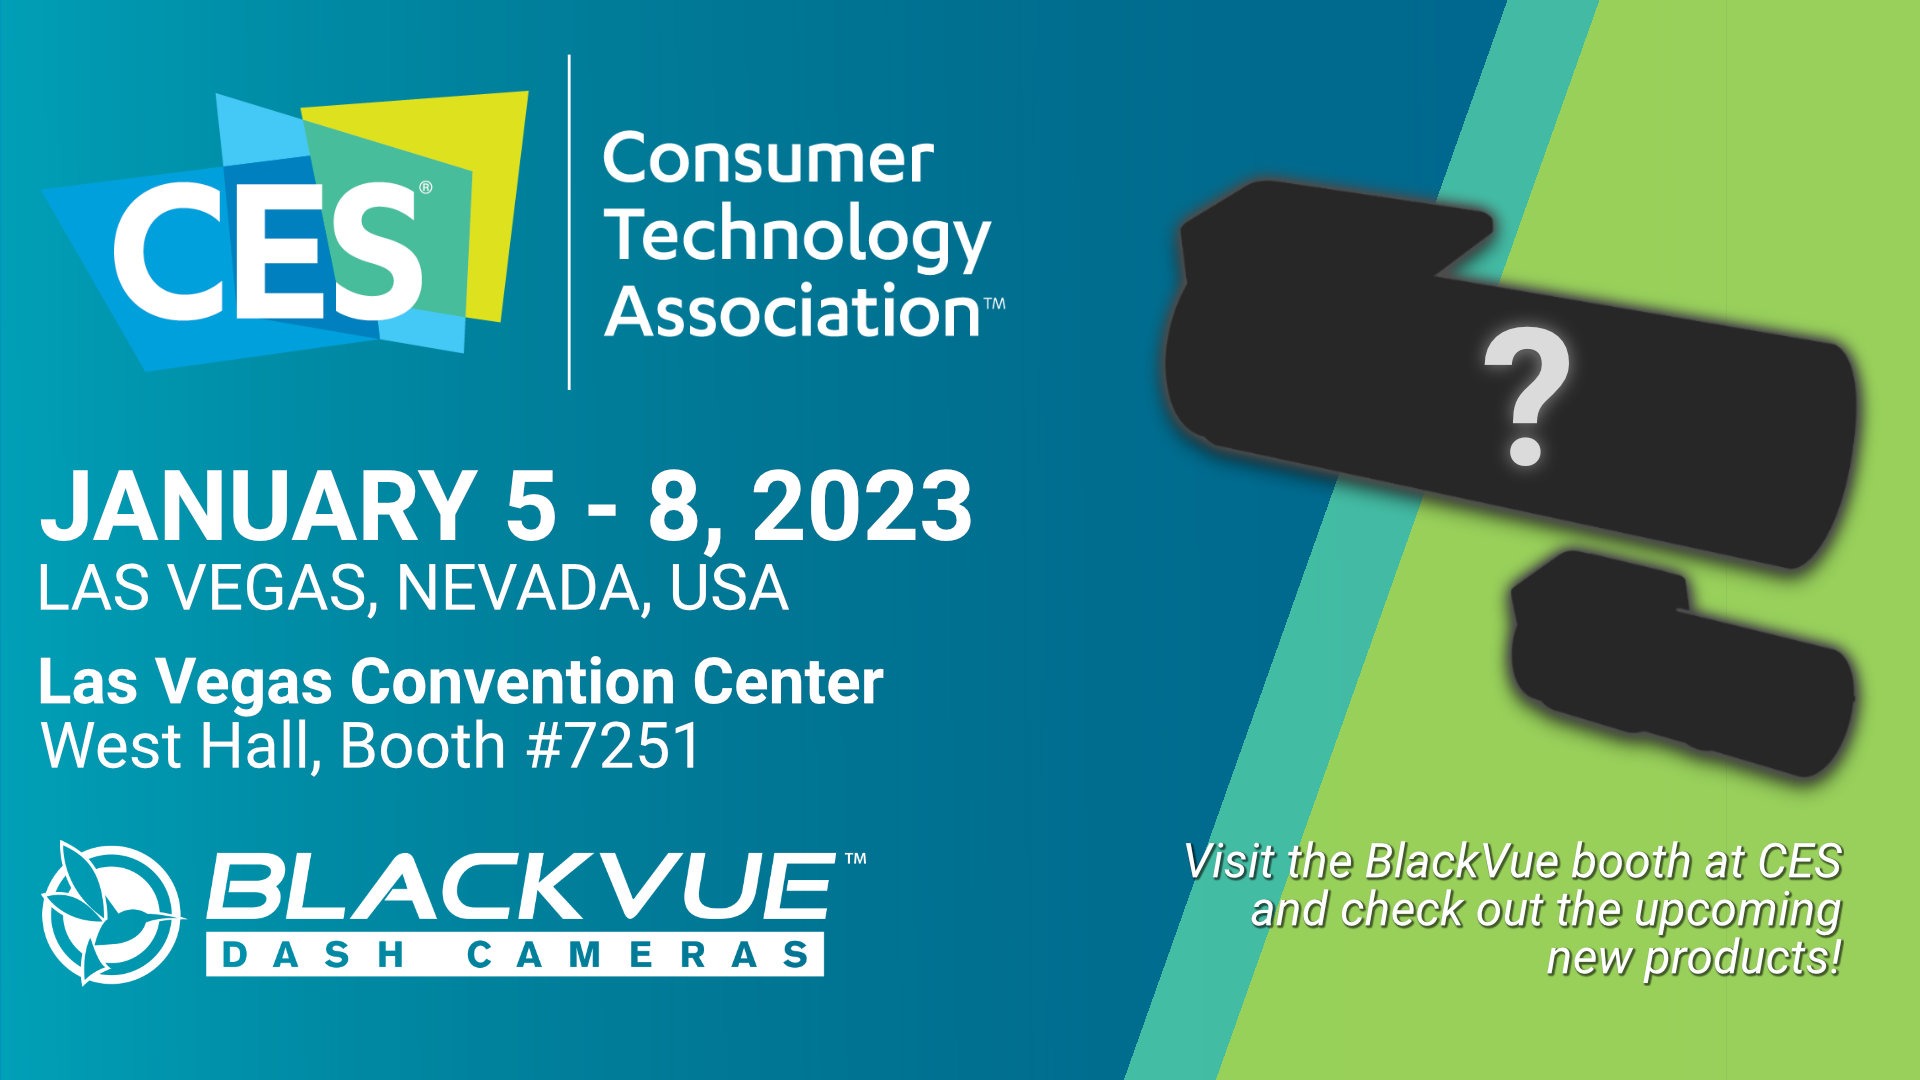 [Trade Show] Visit BlackVue At CES 2023 In Las Vegas